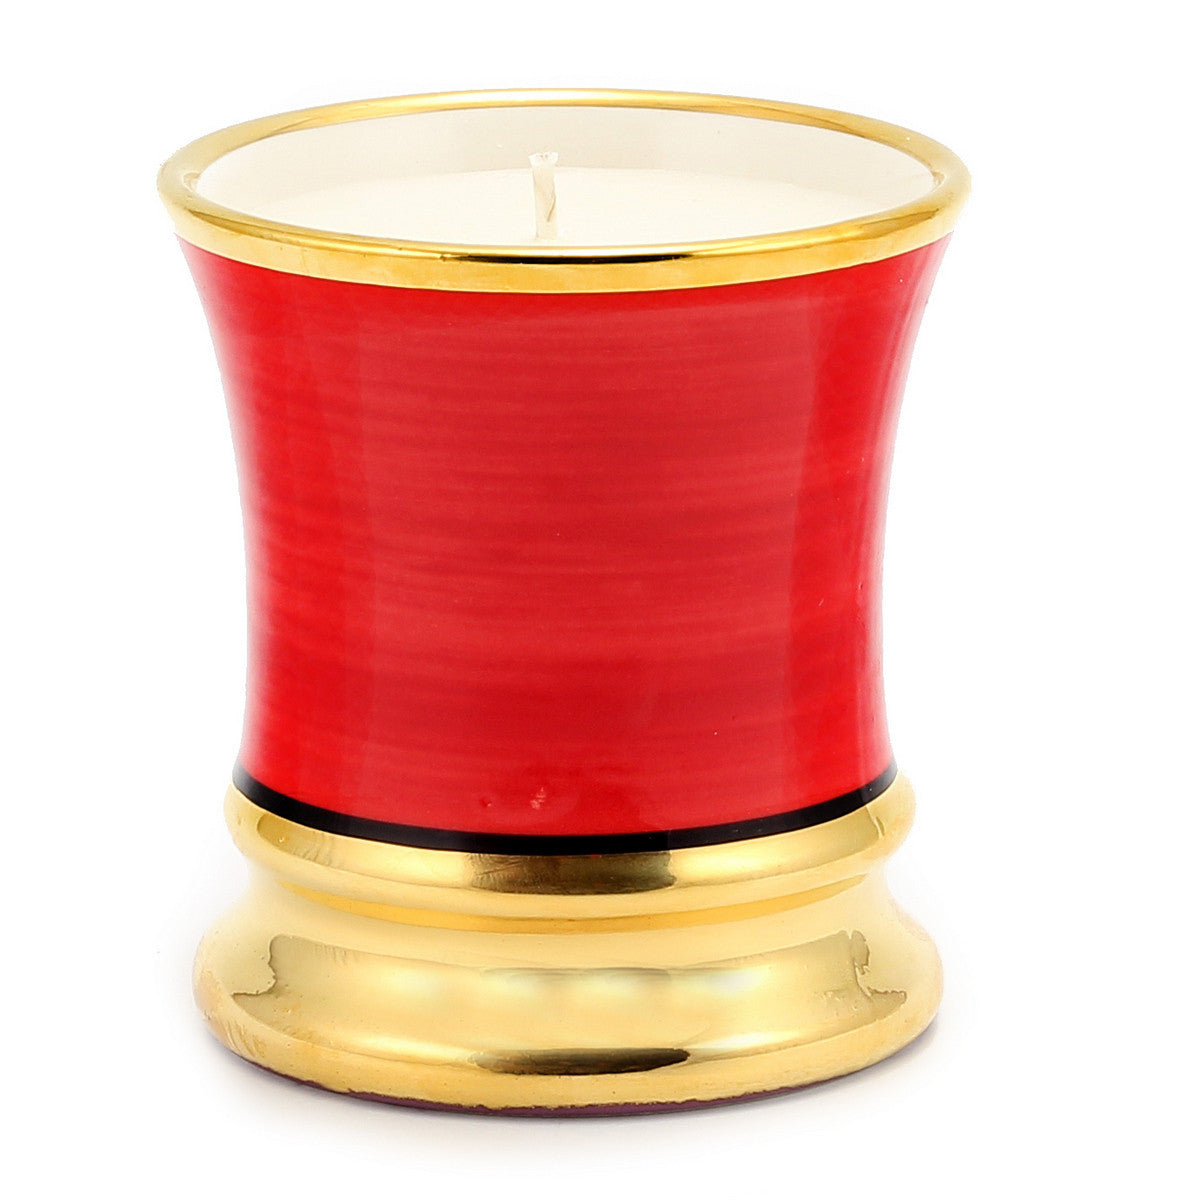 HOLIDAYS CANDLES: Deluxe Precious Cup Candle ~ Coloris Rosso Design ~ Pure Gold Rim - Artistica.com